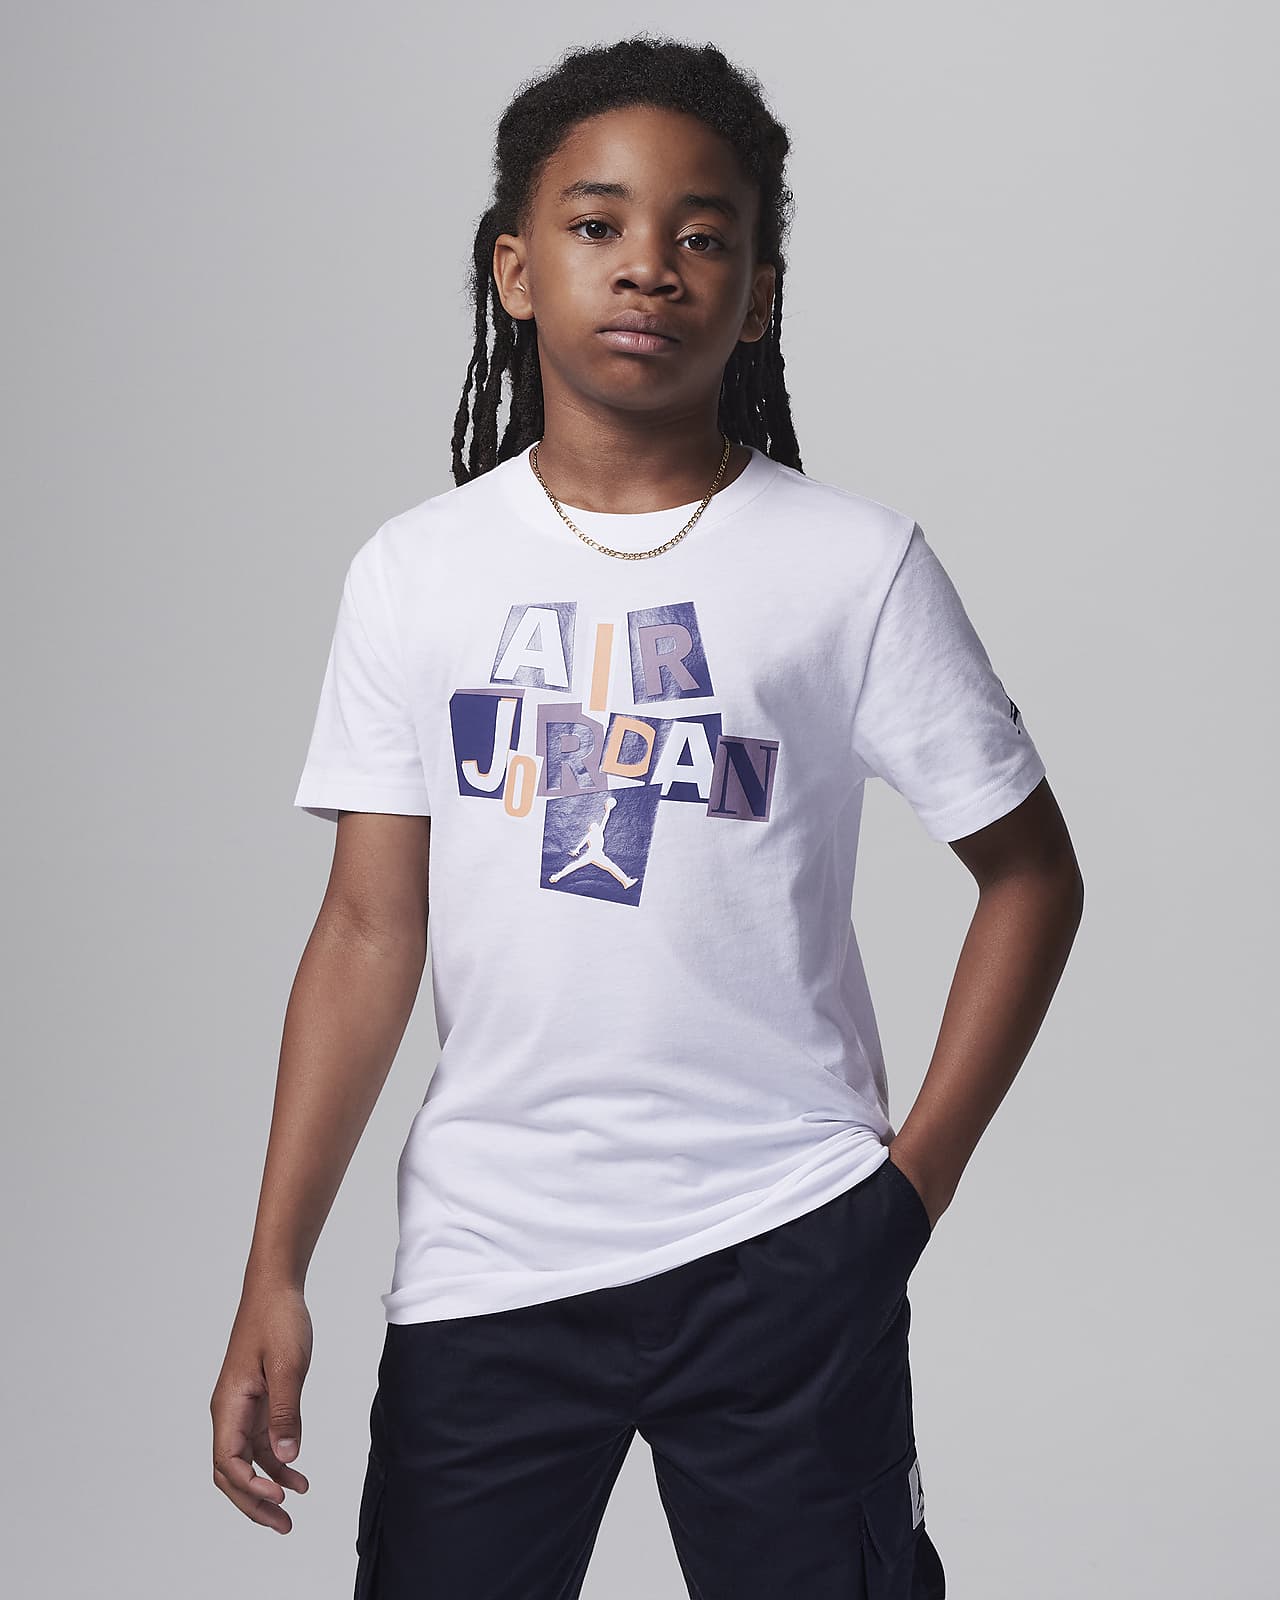 Air Jordan Cutout Tee Big Kids T-Shirt